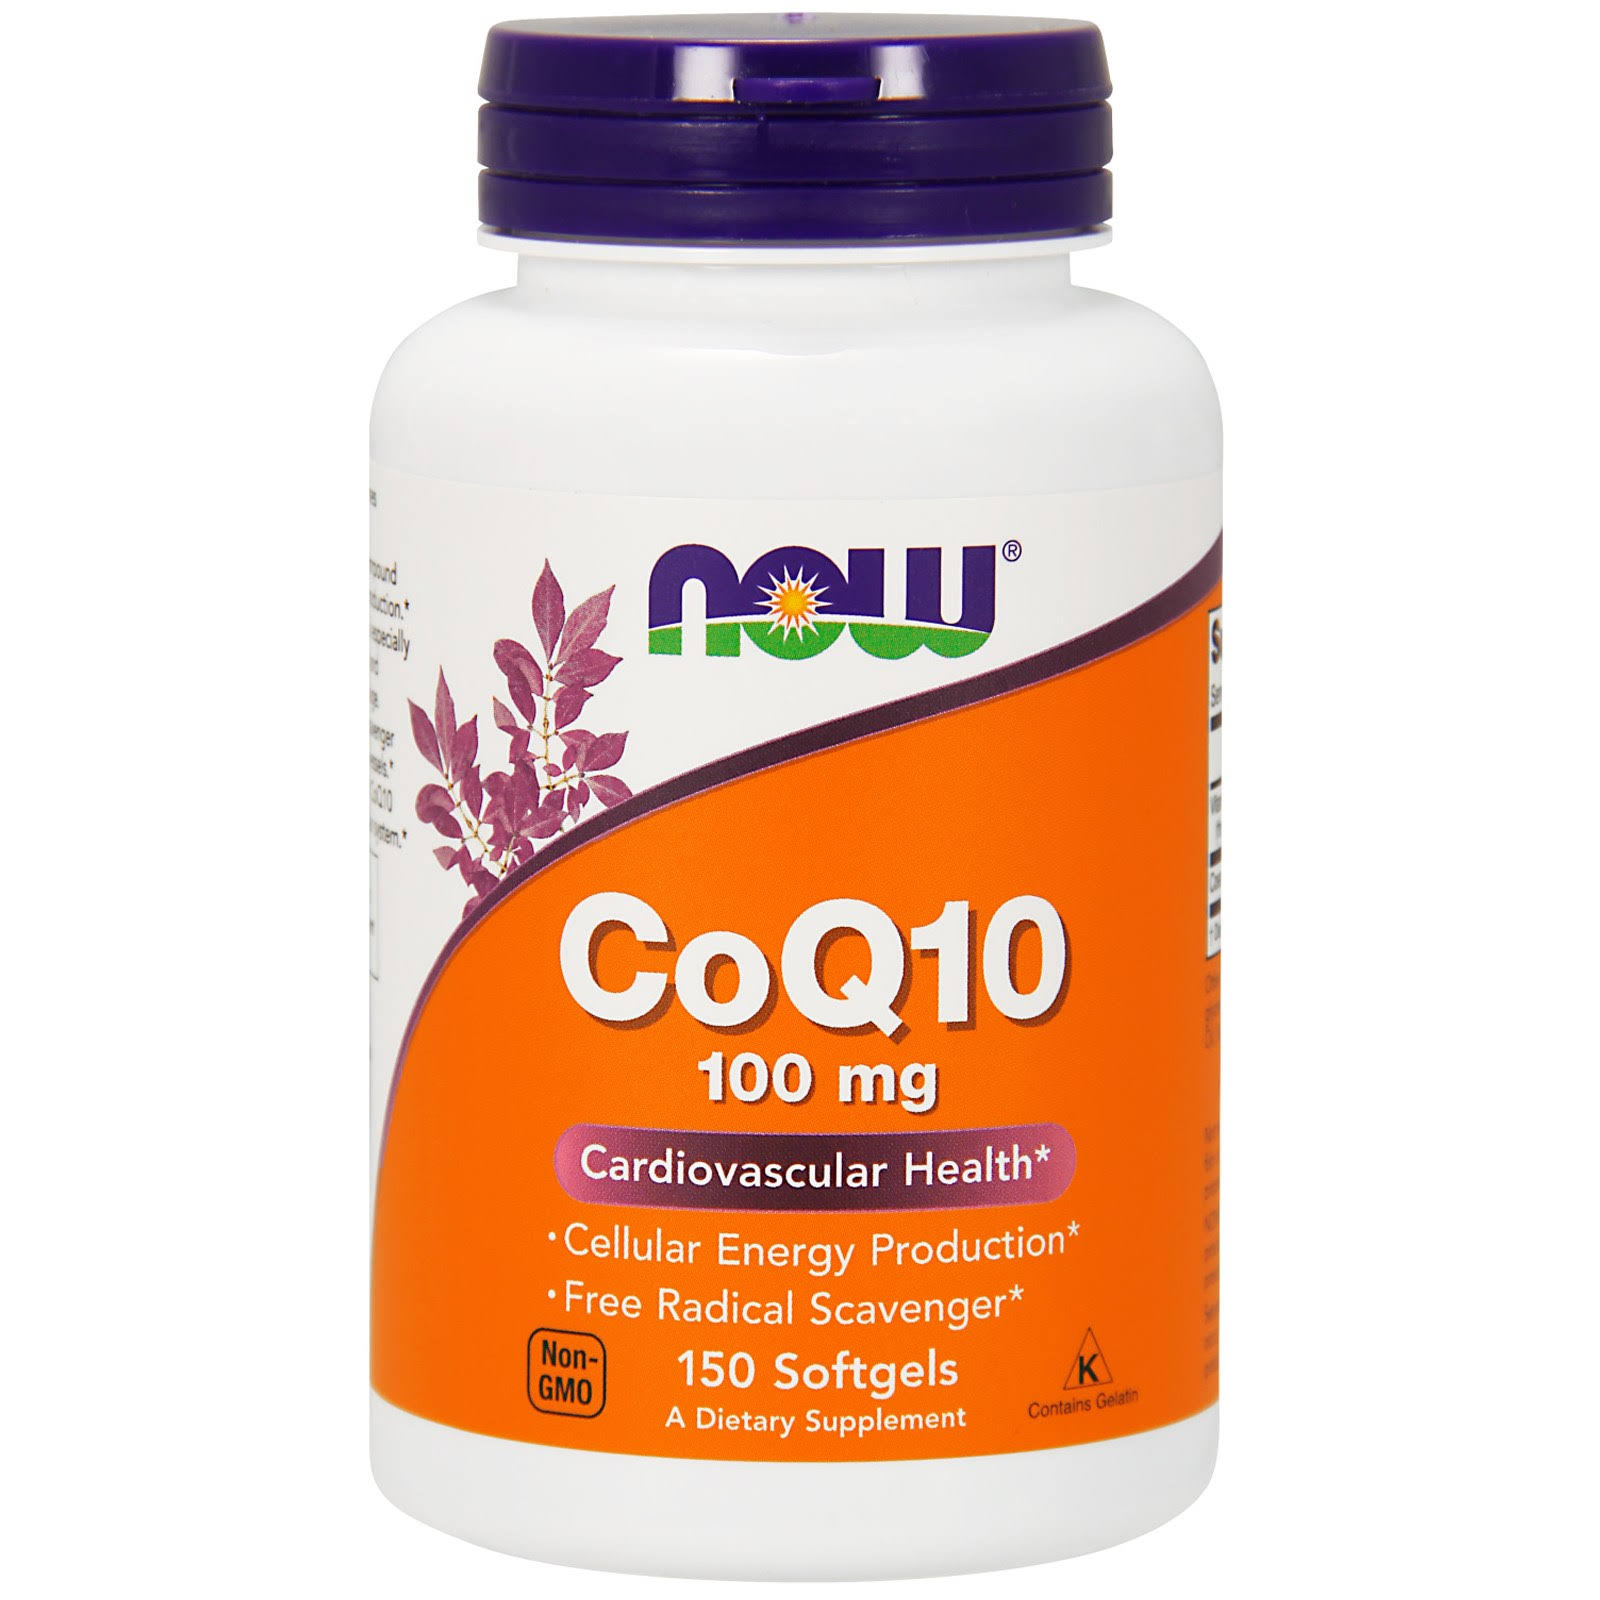 NOW CoQ10 Cardiovascular Health Supplement - 150 Softgels